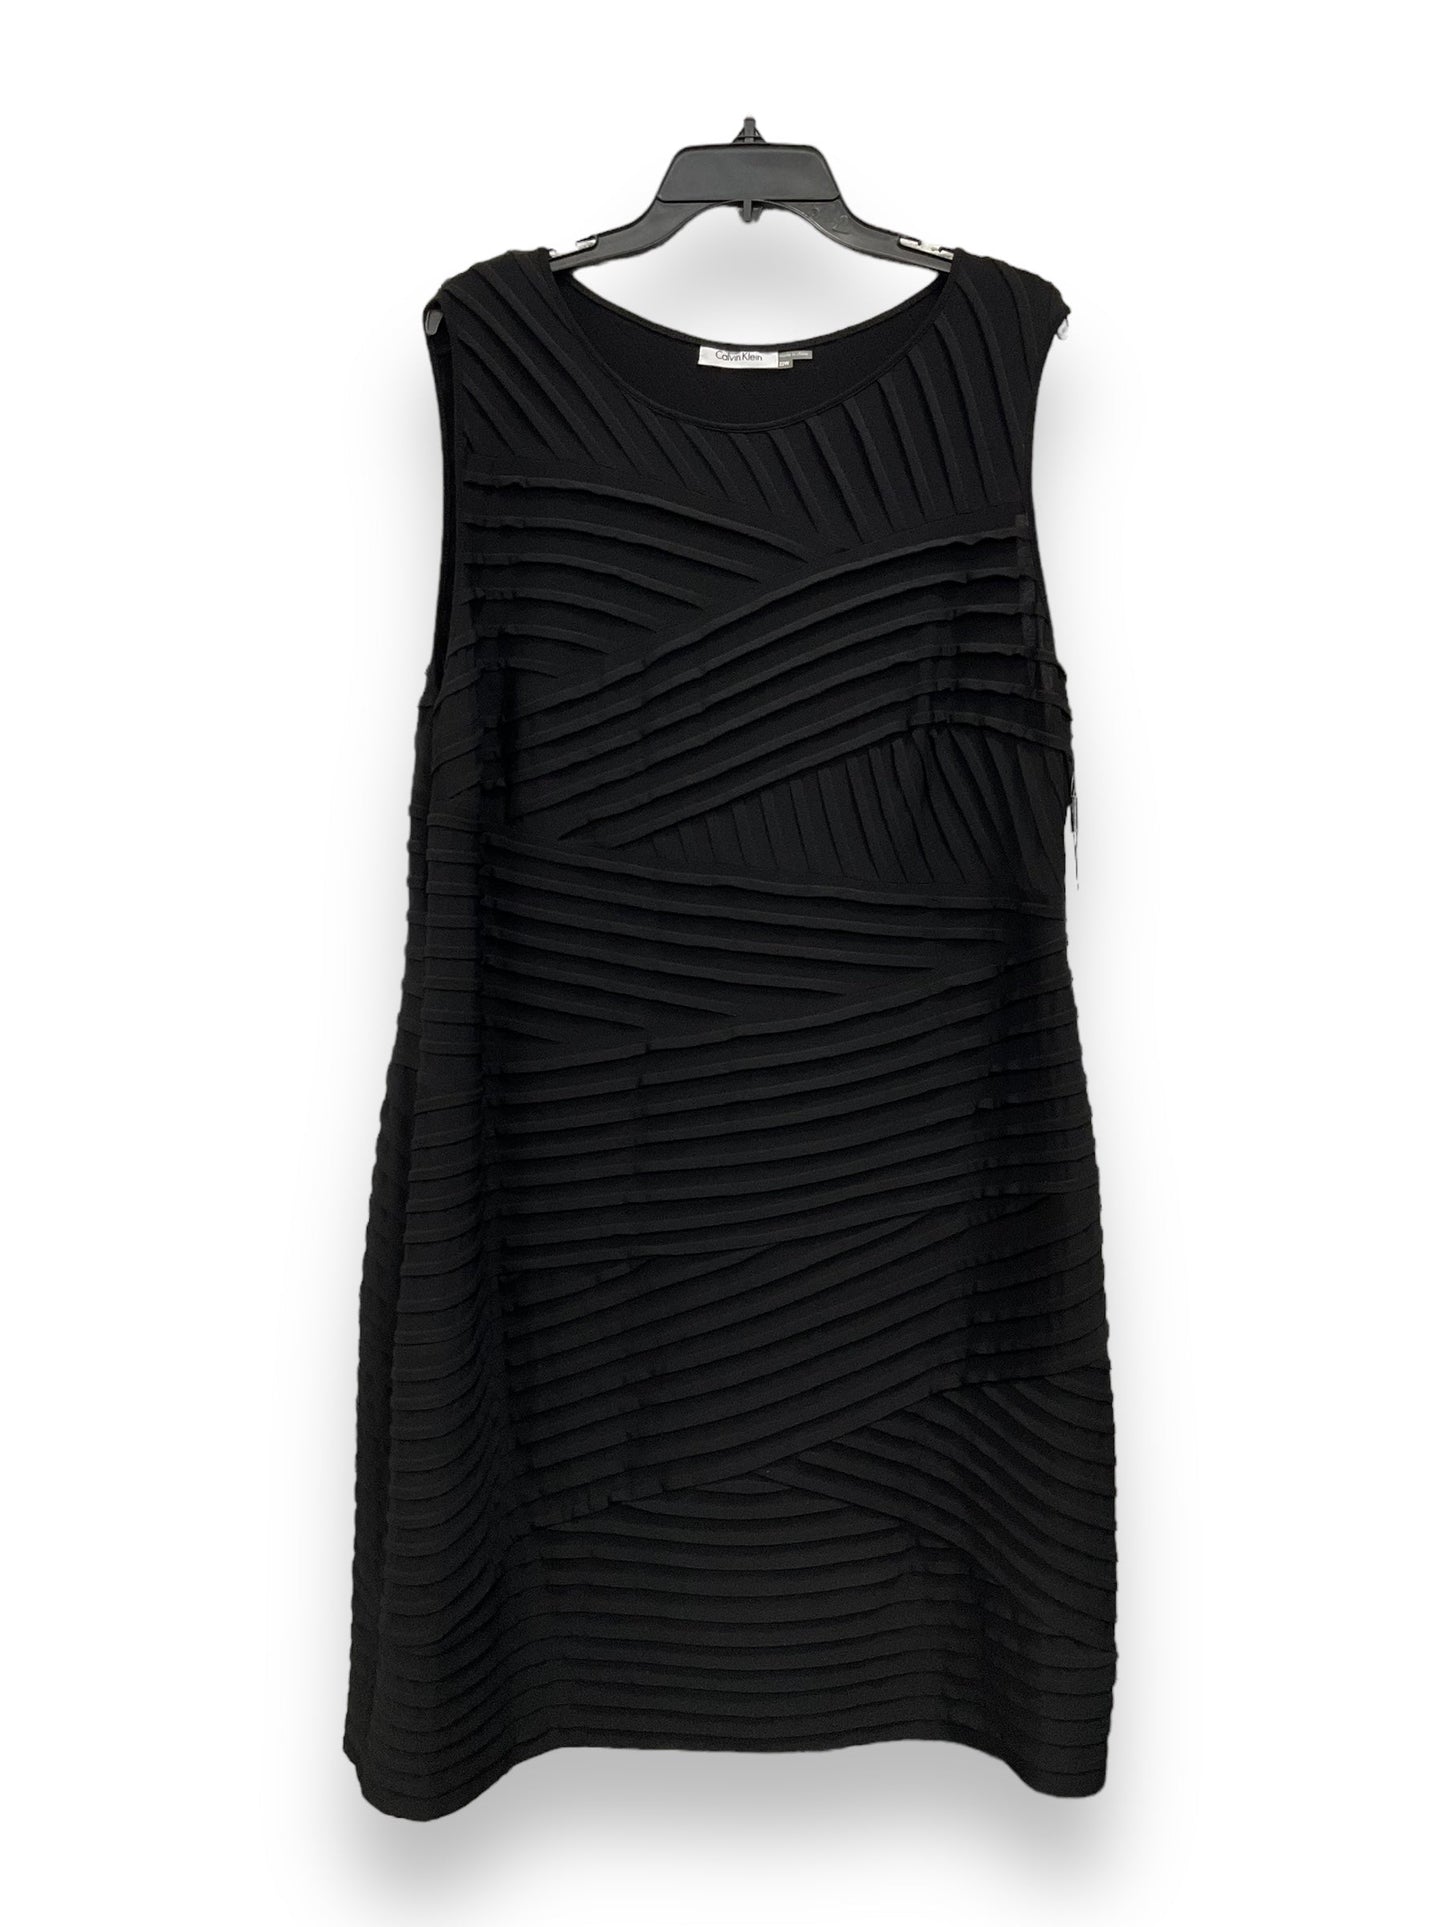 Black Dress Casual Short Calvin Klein, Size 3x